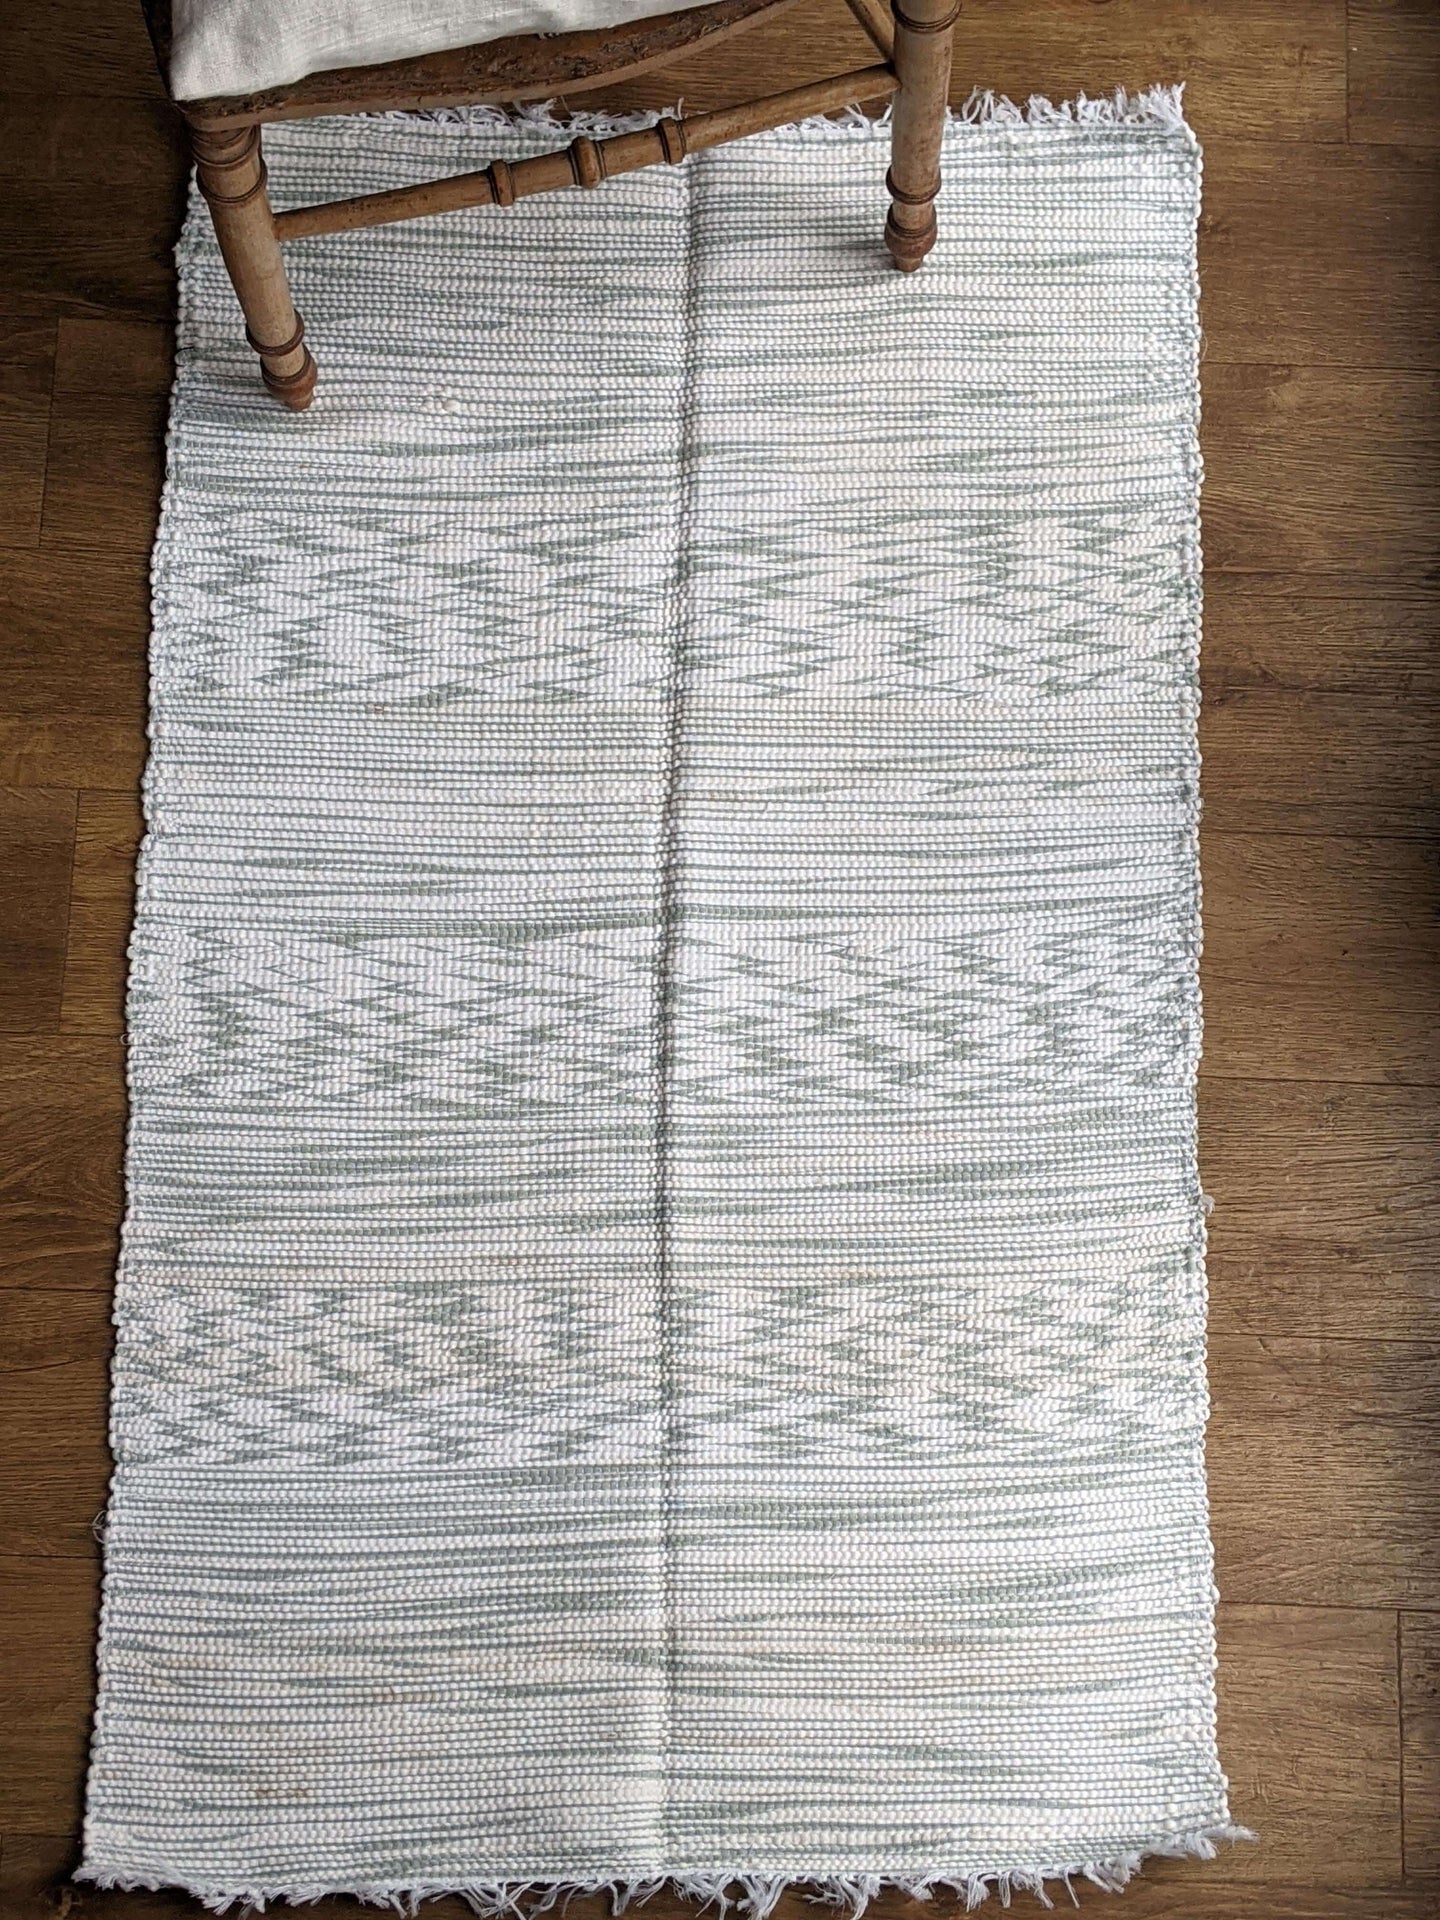 Handmade handwoven white and grey rug